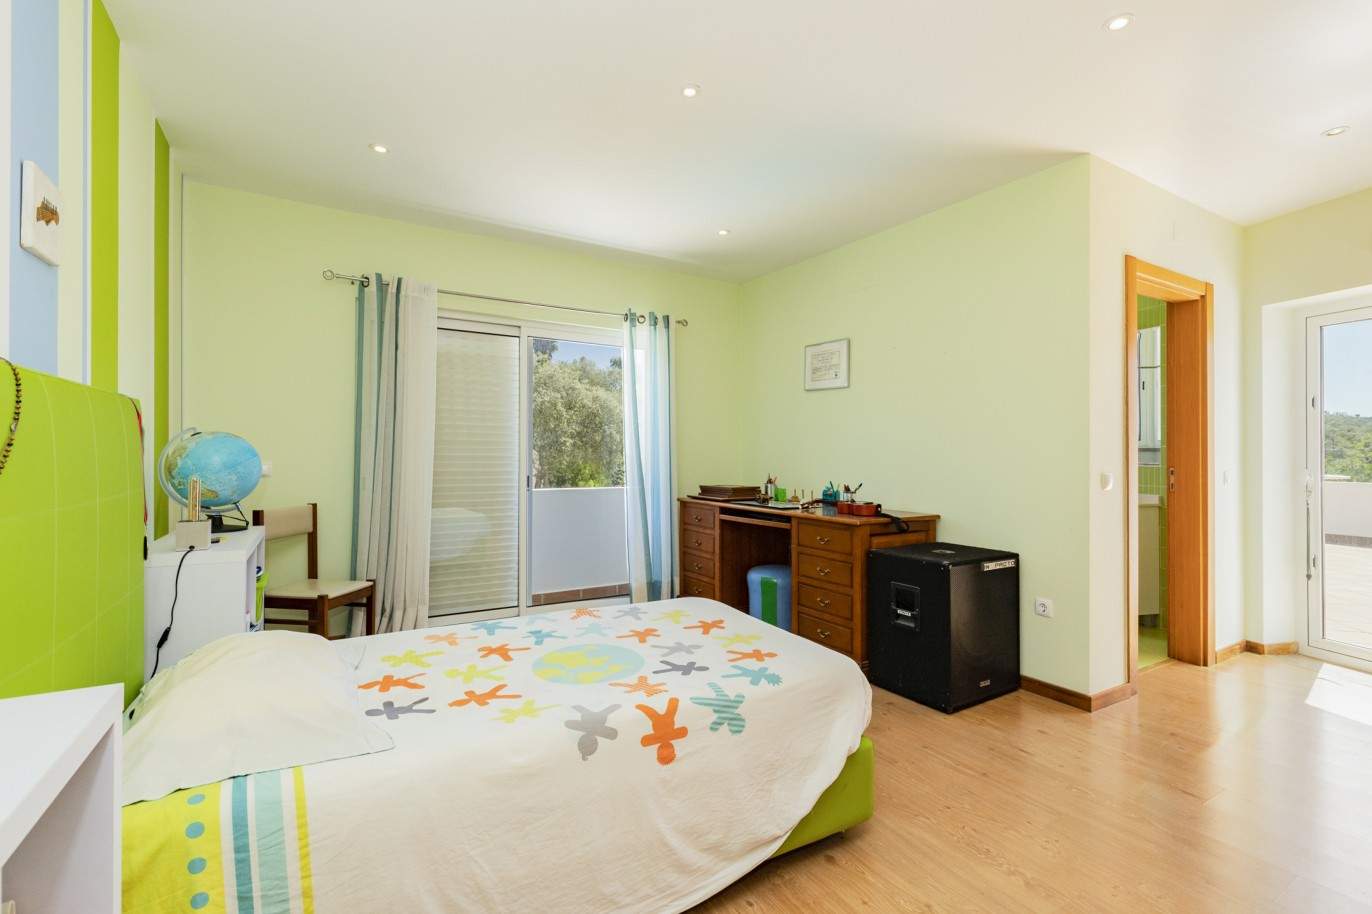 4 Bedroom Villa with pool, for sale in Loulé, Algarve_201291